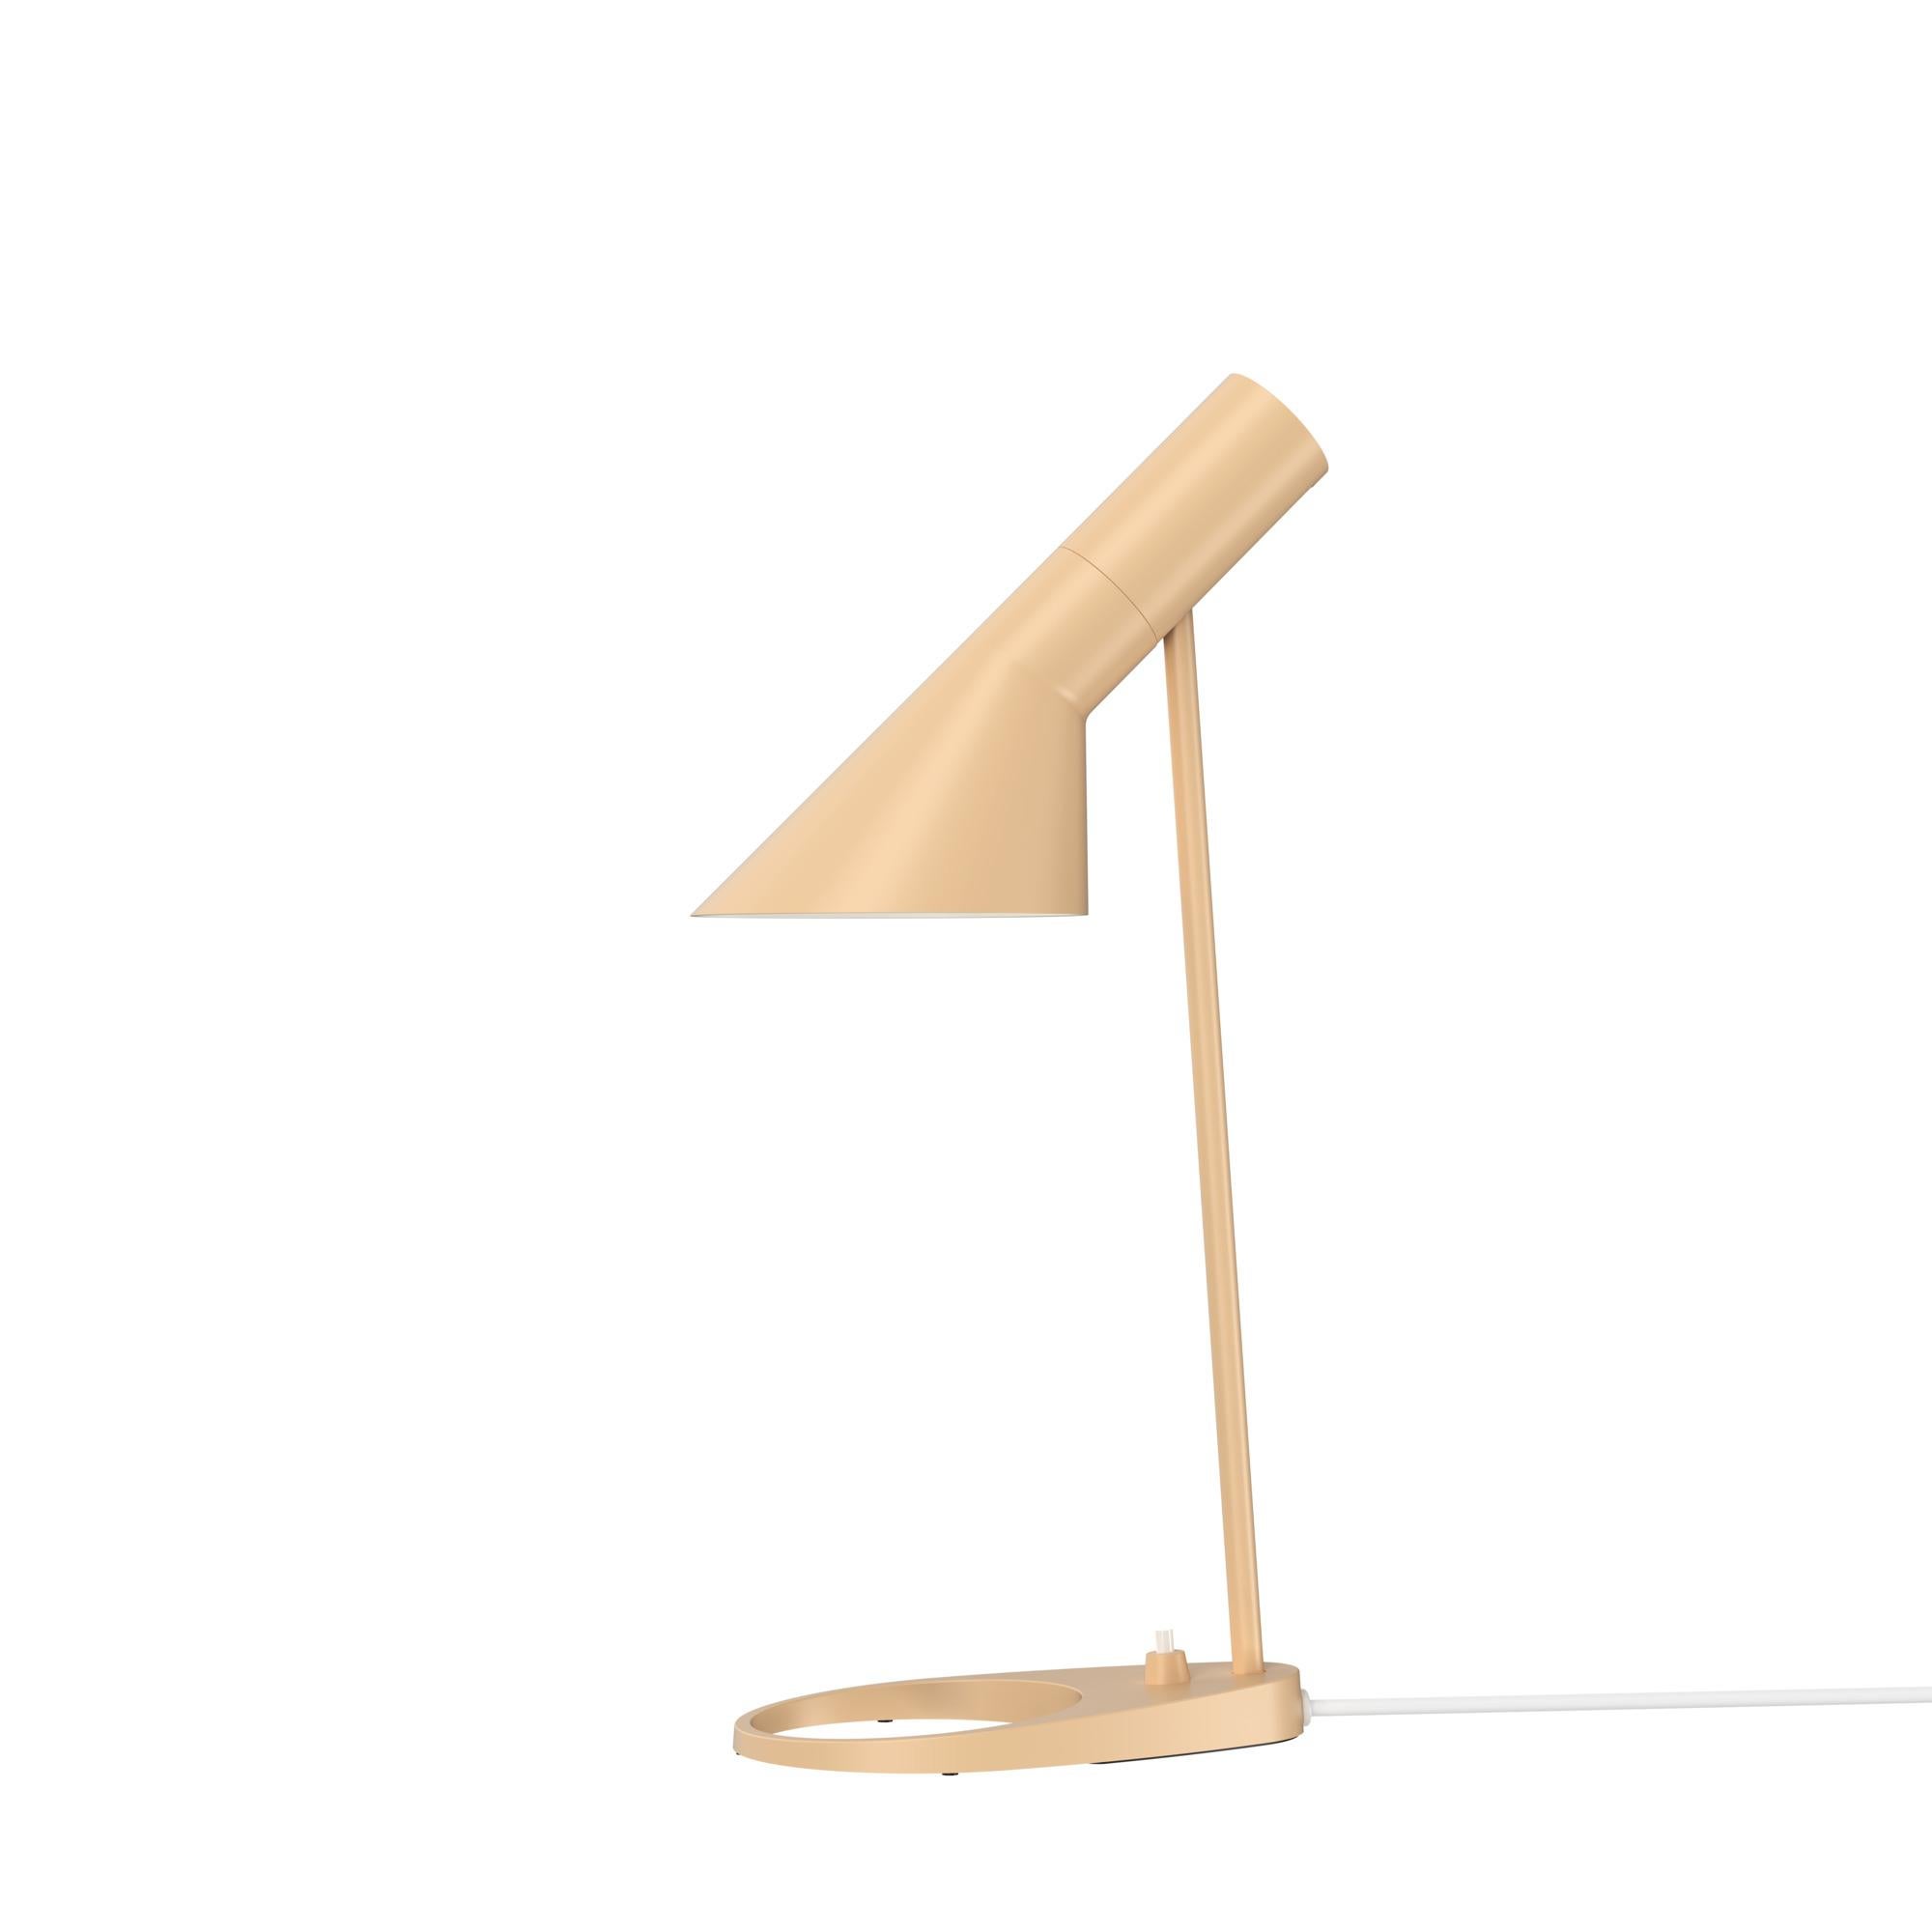 Arne Jacobsen 'Aj Mini' Table Lamp in Electric Orange for Louis Poulsen For Sale 8